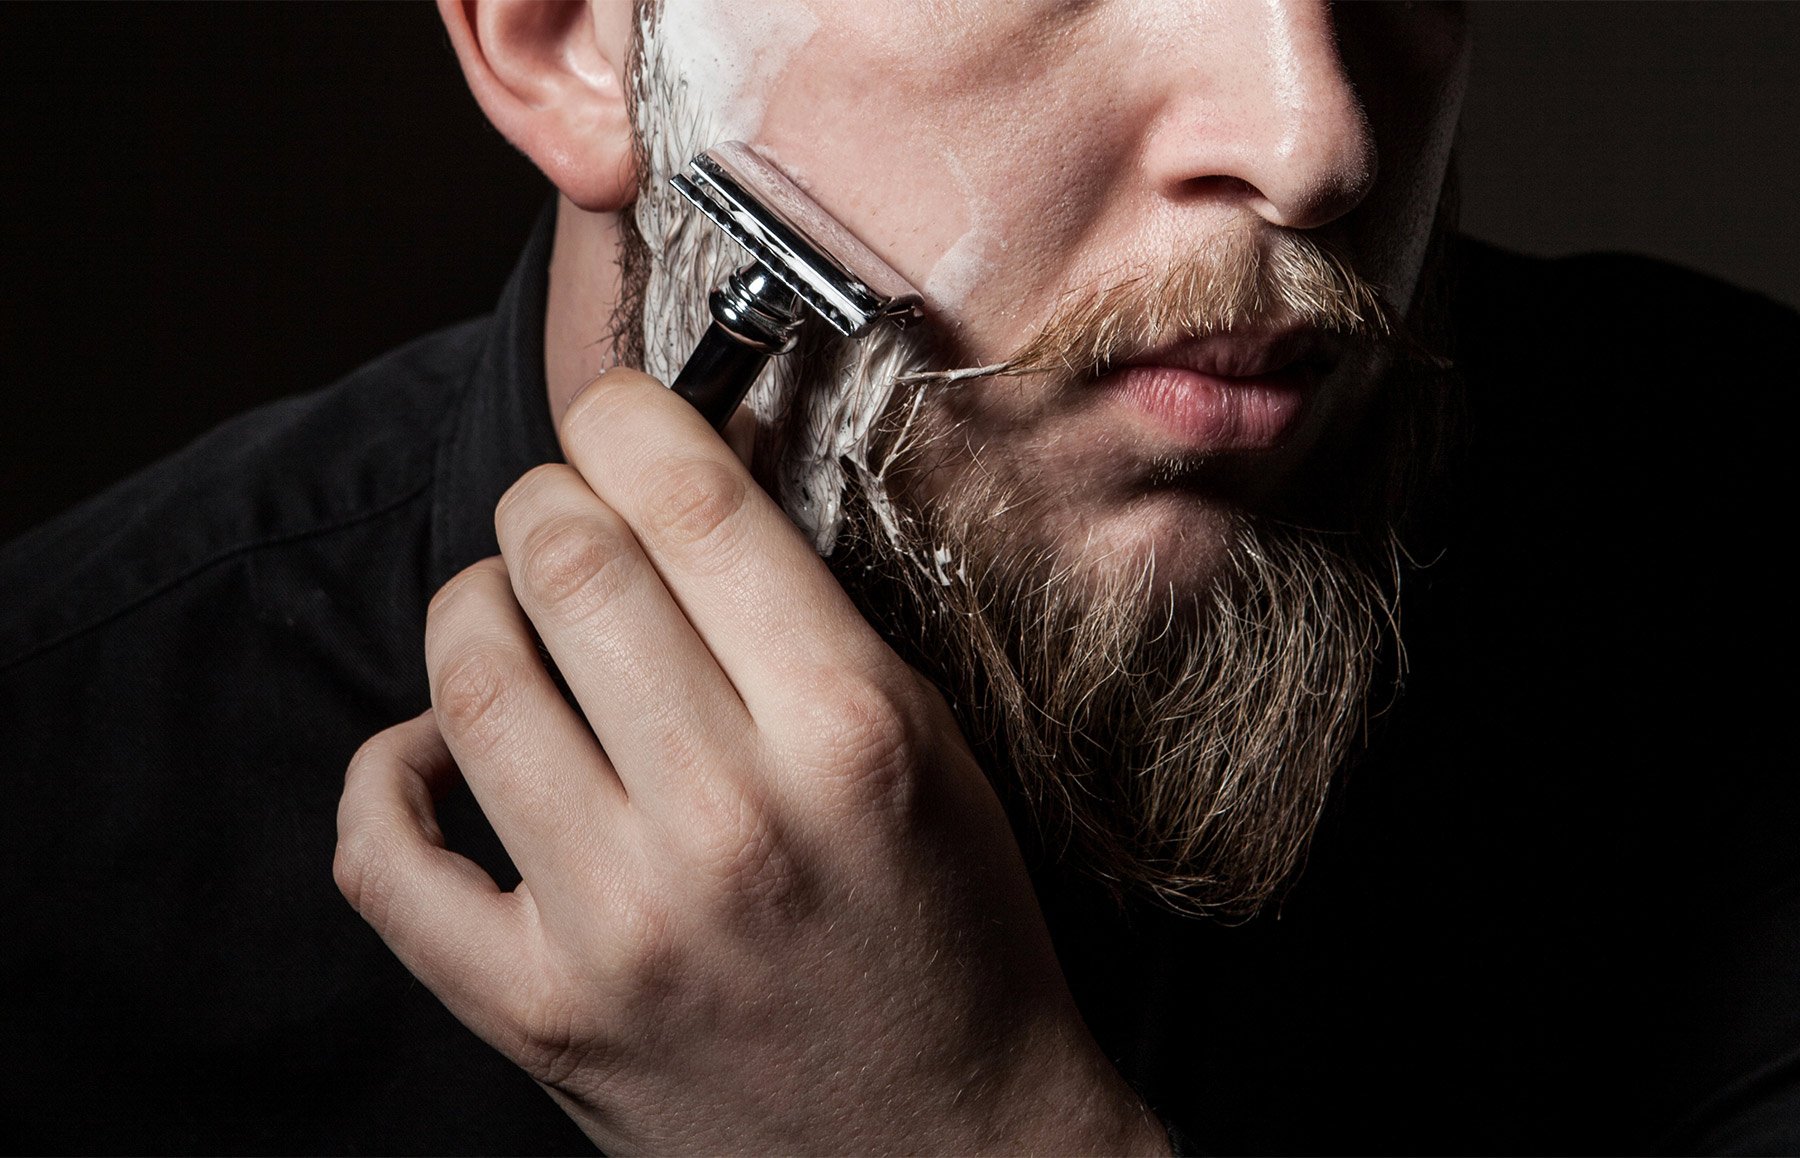 Мужчина бреет бороду. Мужчина бреется. Мужик с бритвой. Бритва для бороды барбершоп. Опаска для бритья.